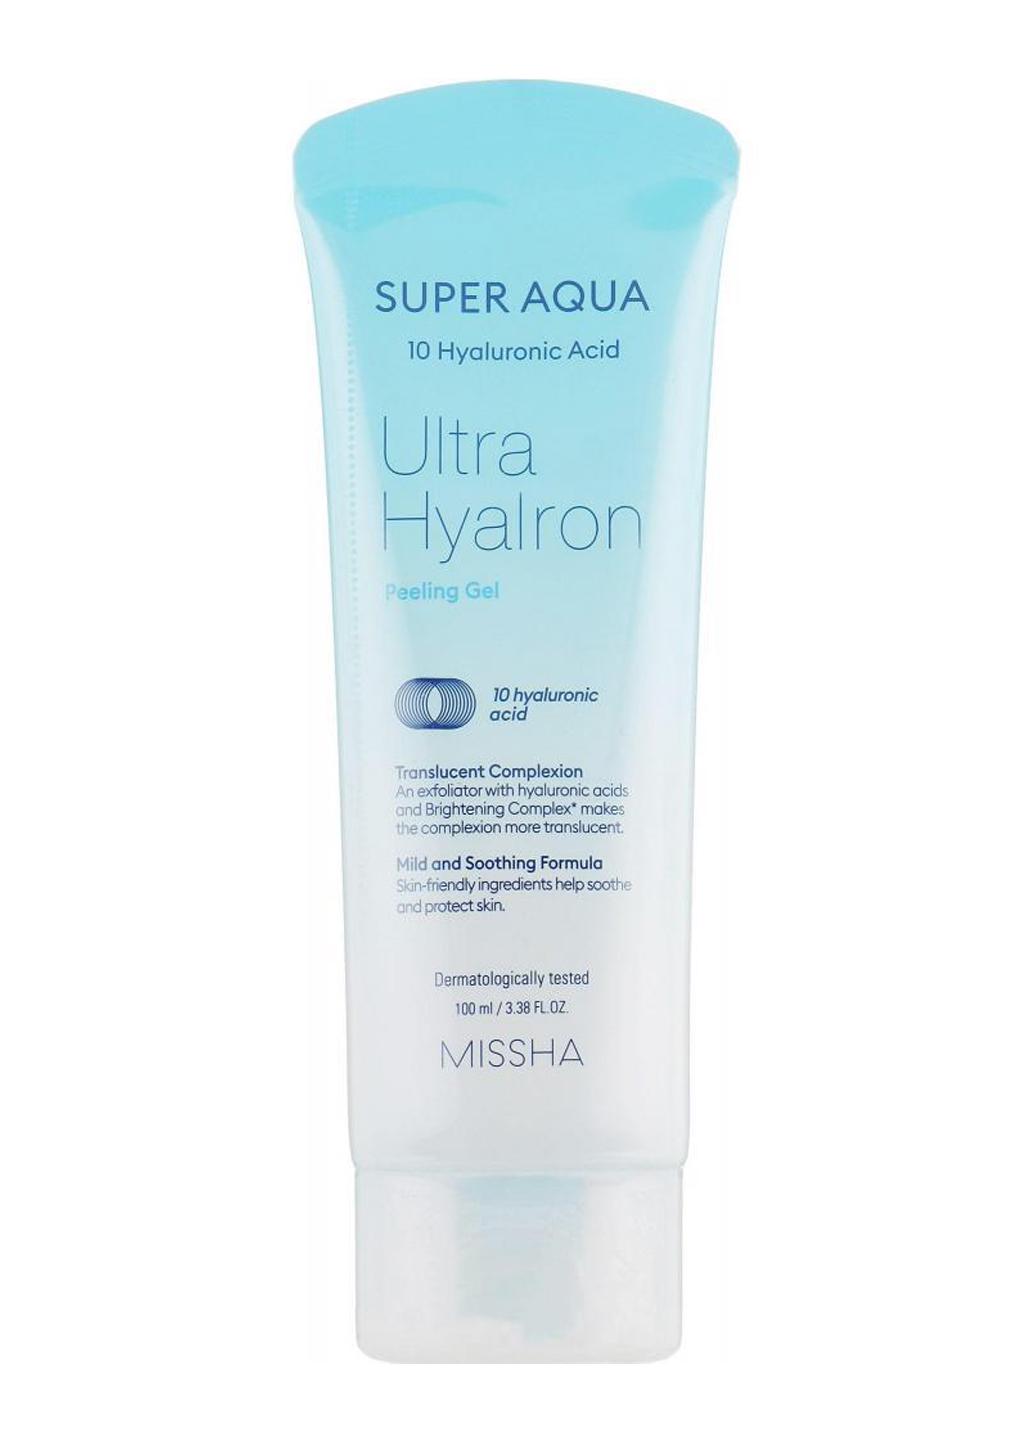 Гель-пілінг MISSHA Super Aqua Ultra Hyalron Peeling Gel для обличчя 100 мл (528360) - фото 1